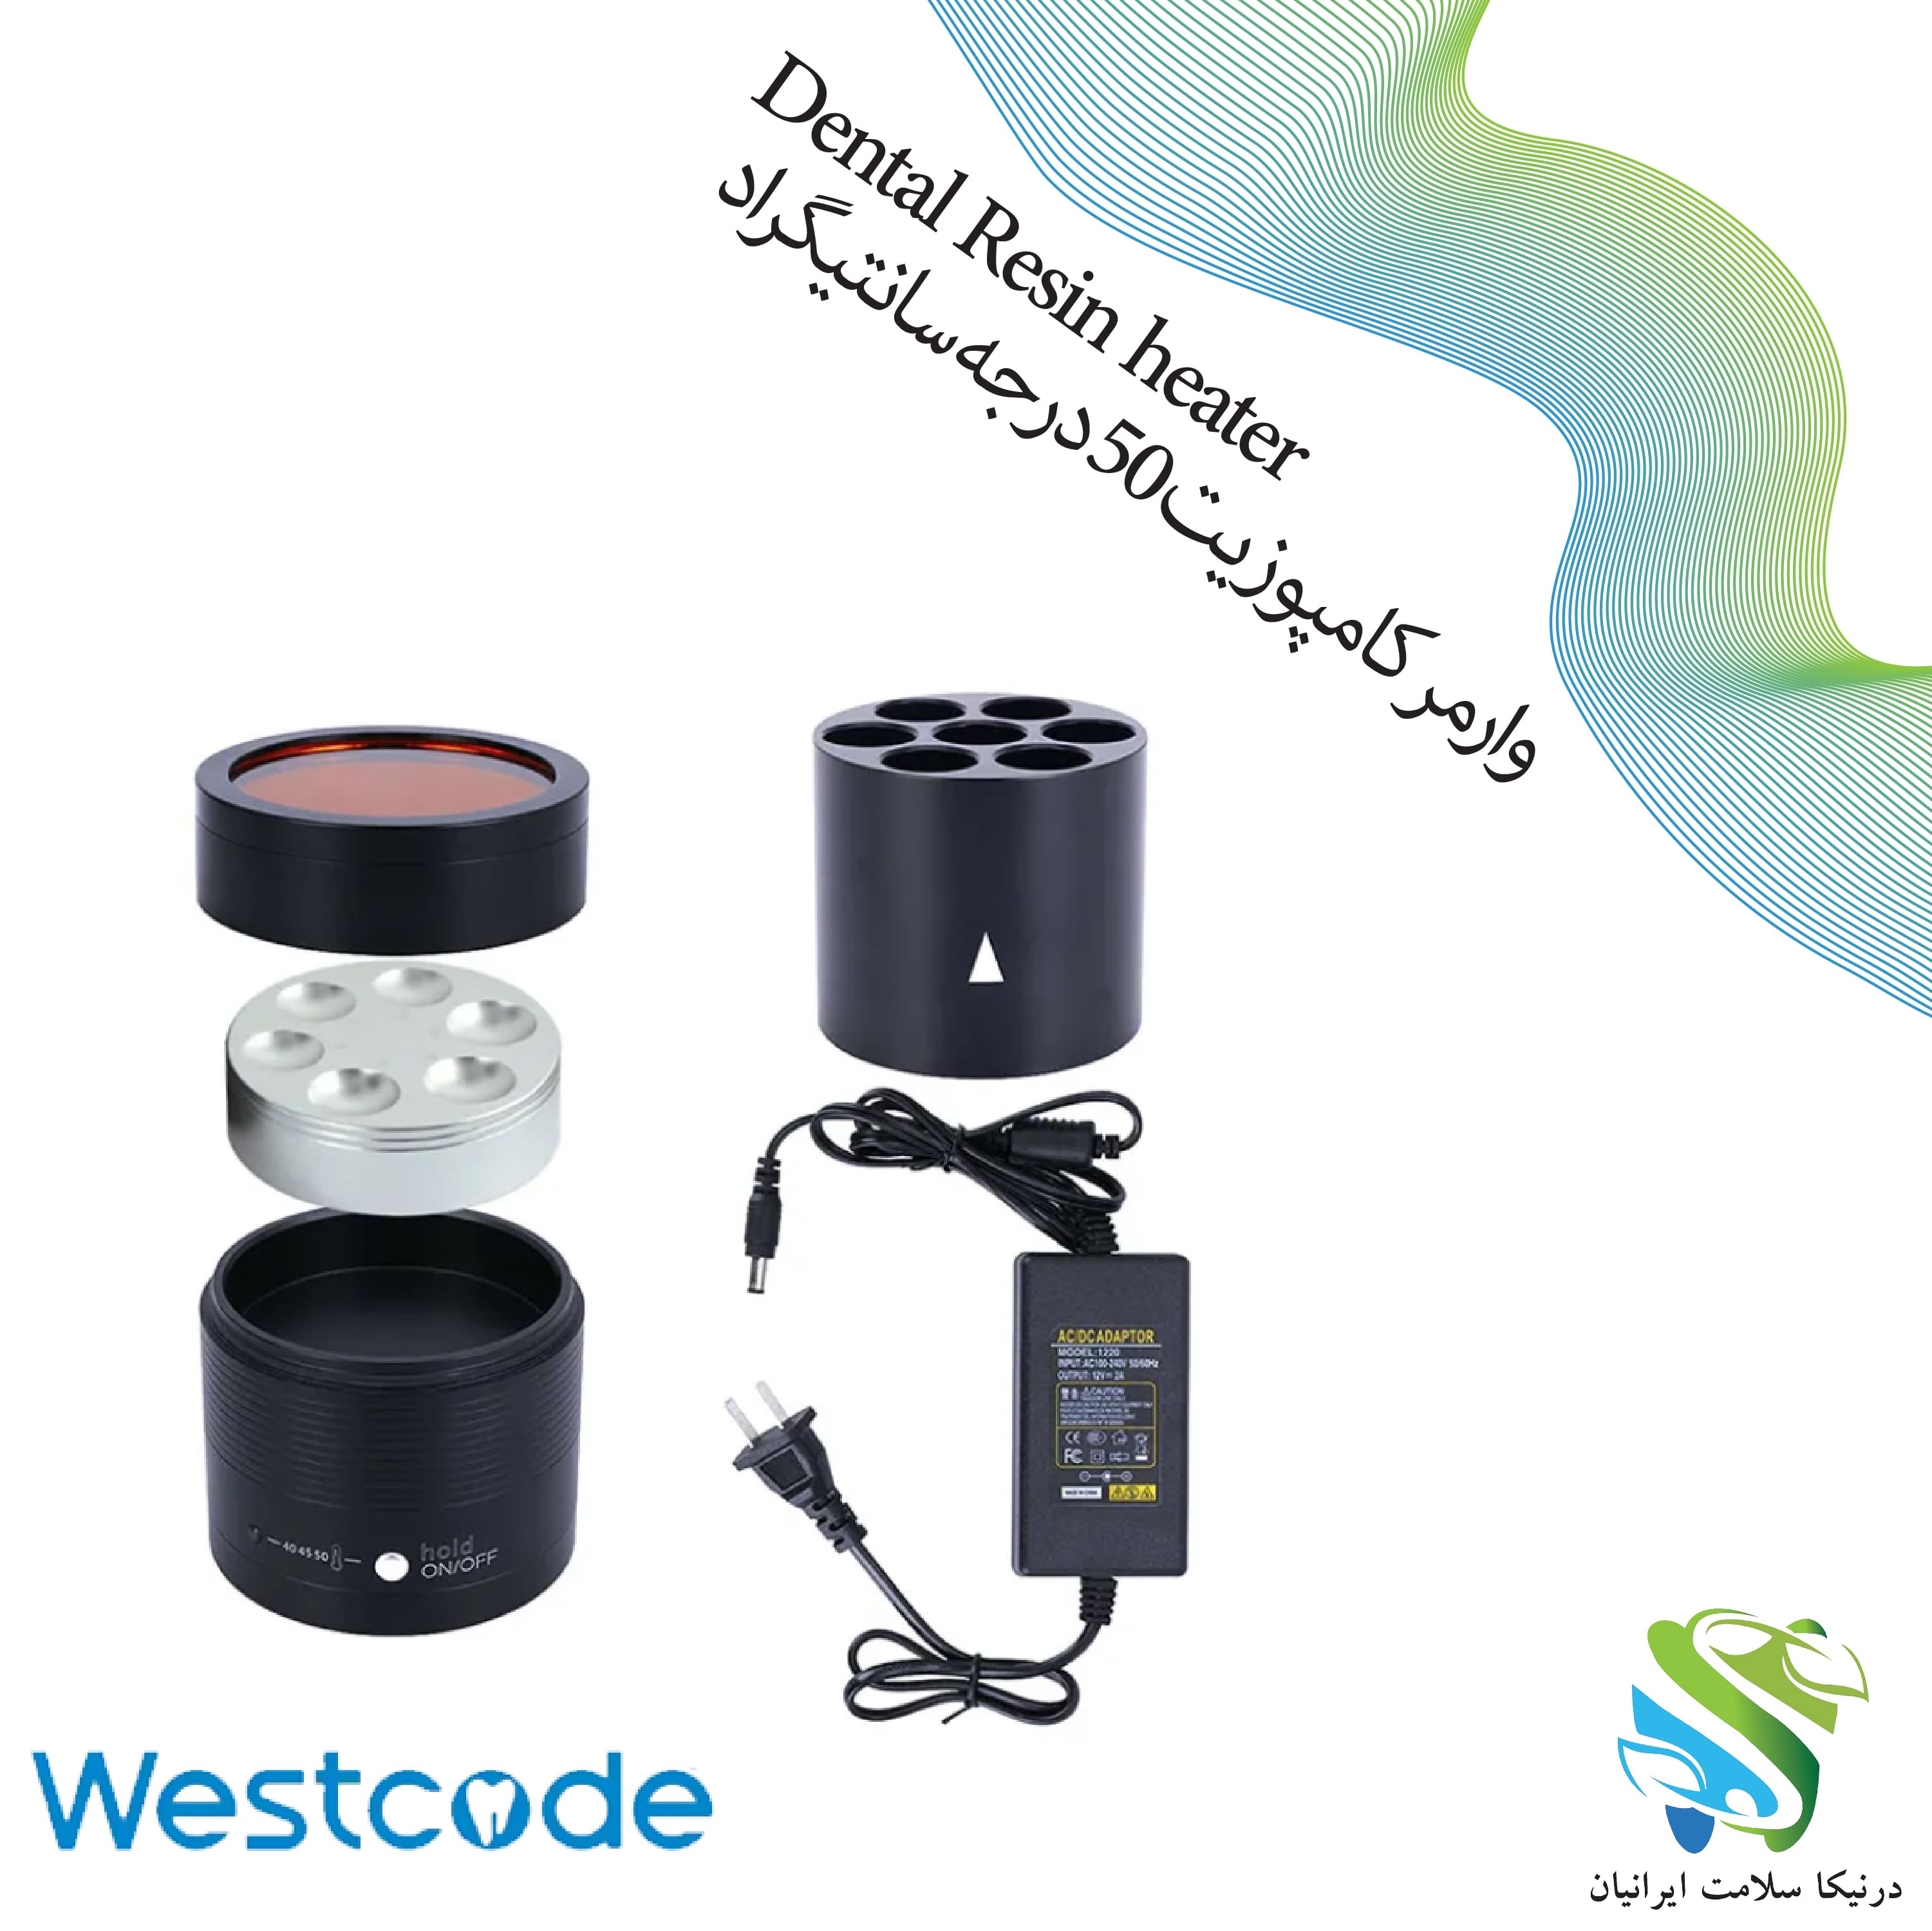 وارمر کامپوزیت 50درجه سانتیگراد Composite  multi Heater Digital Westcode